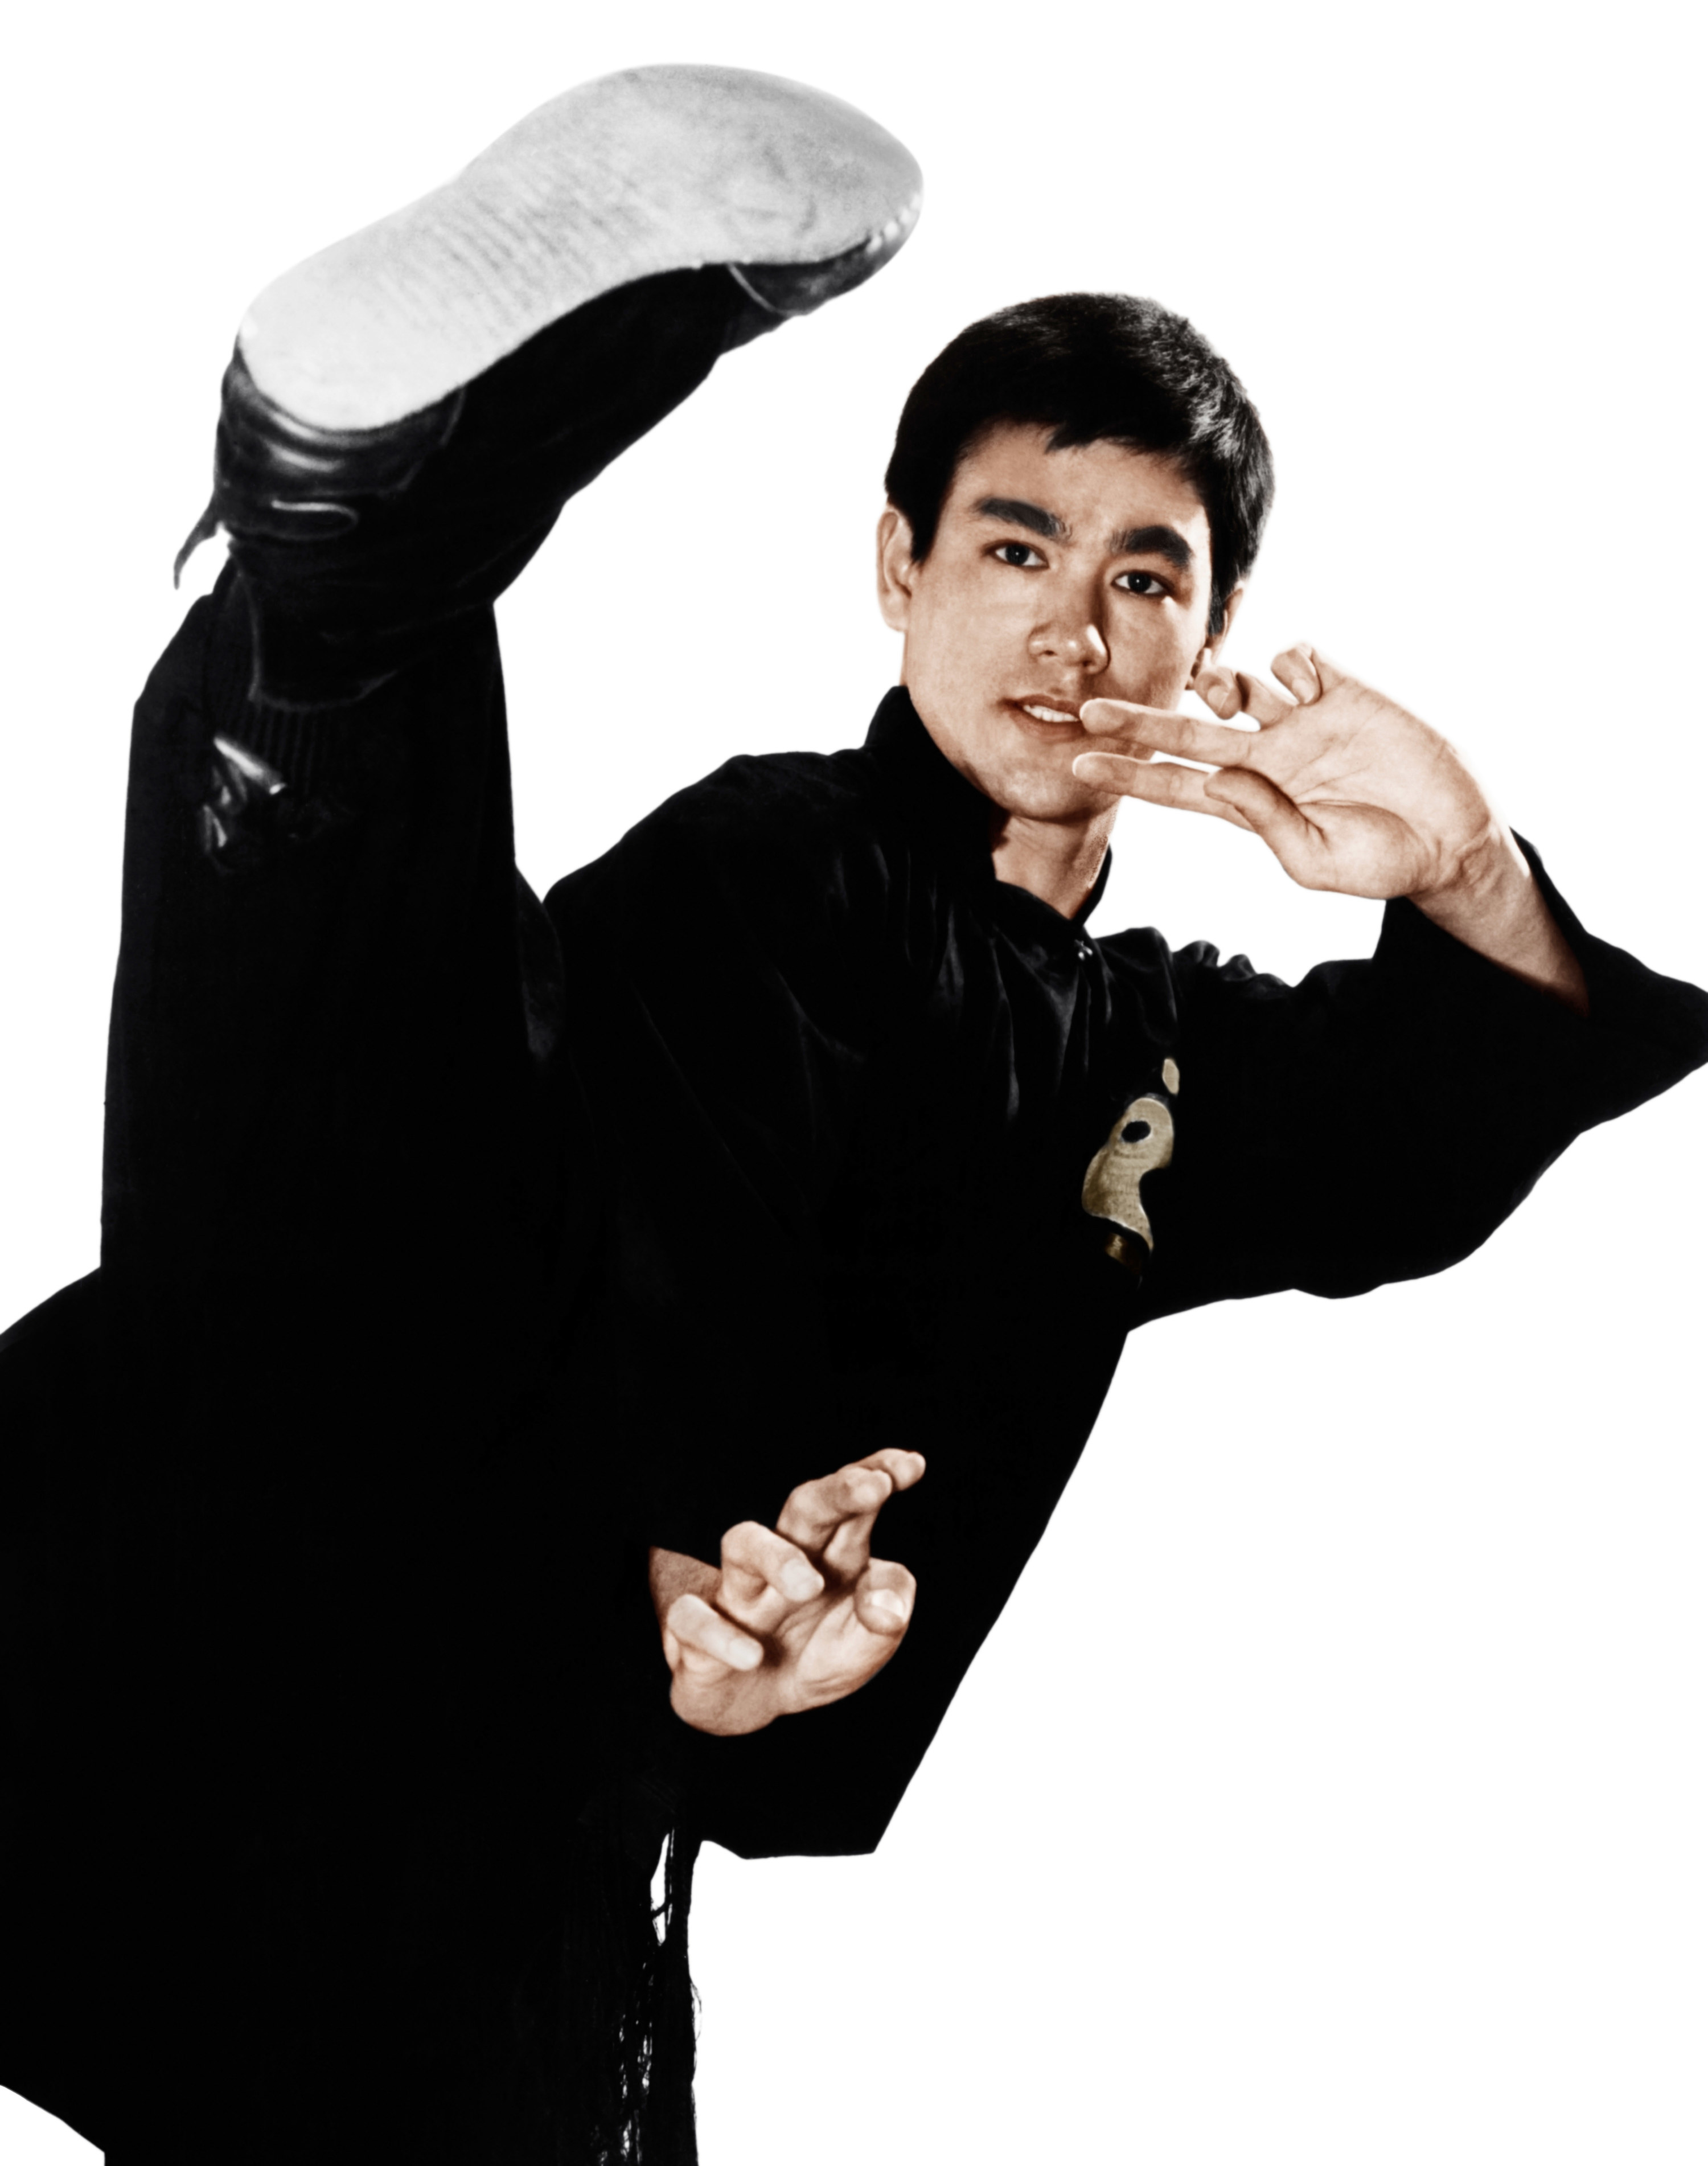 Bruce Lee in costume doing a karate kick